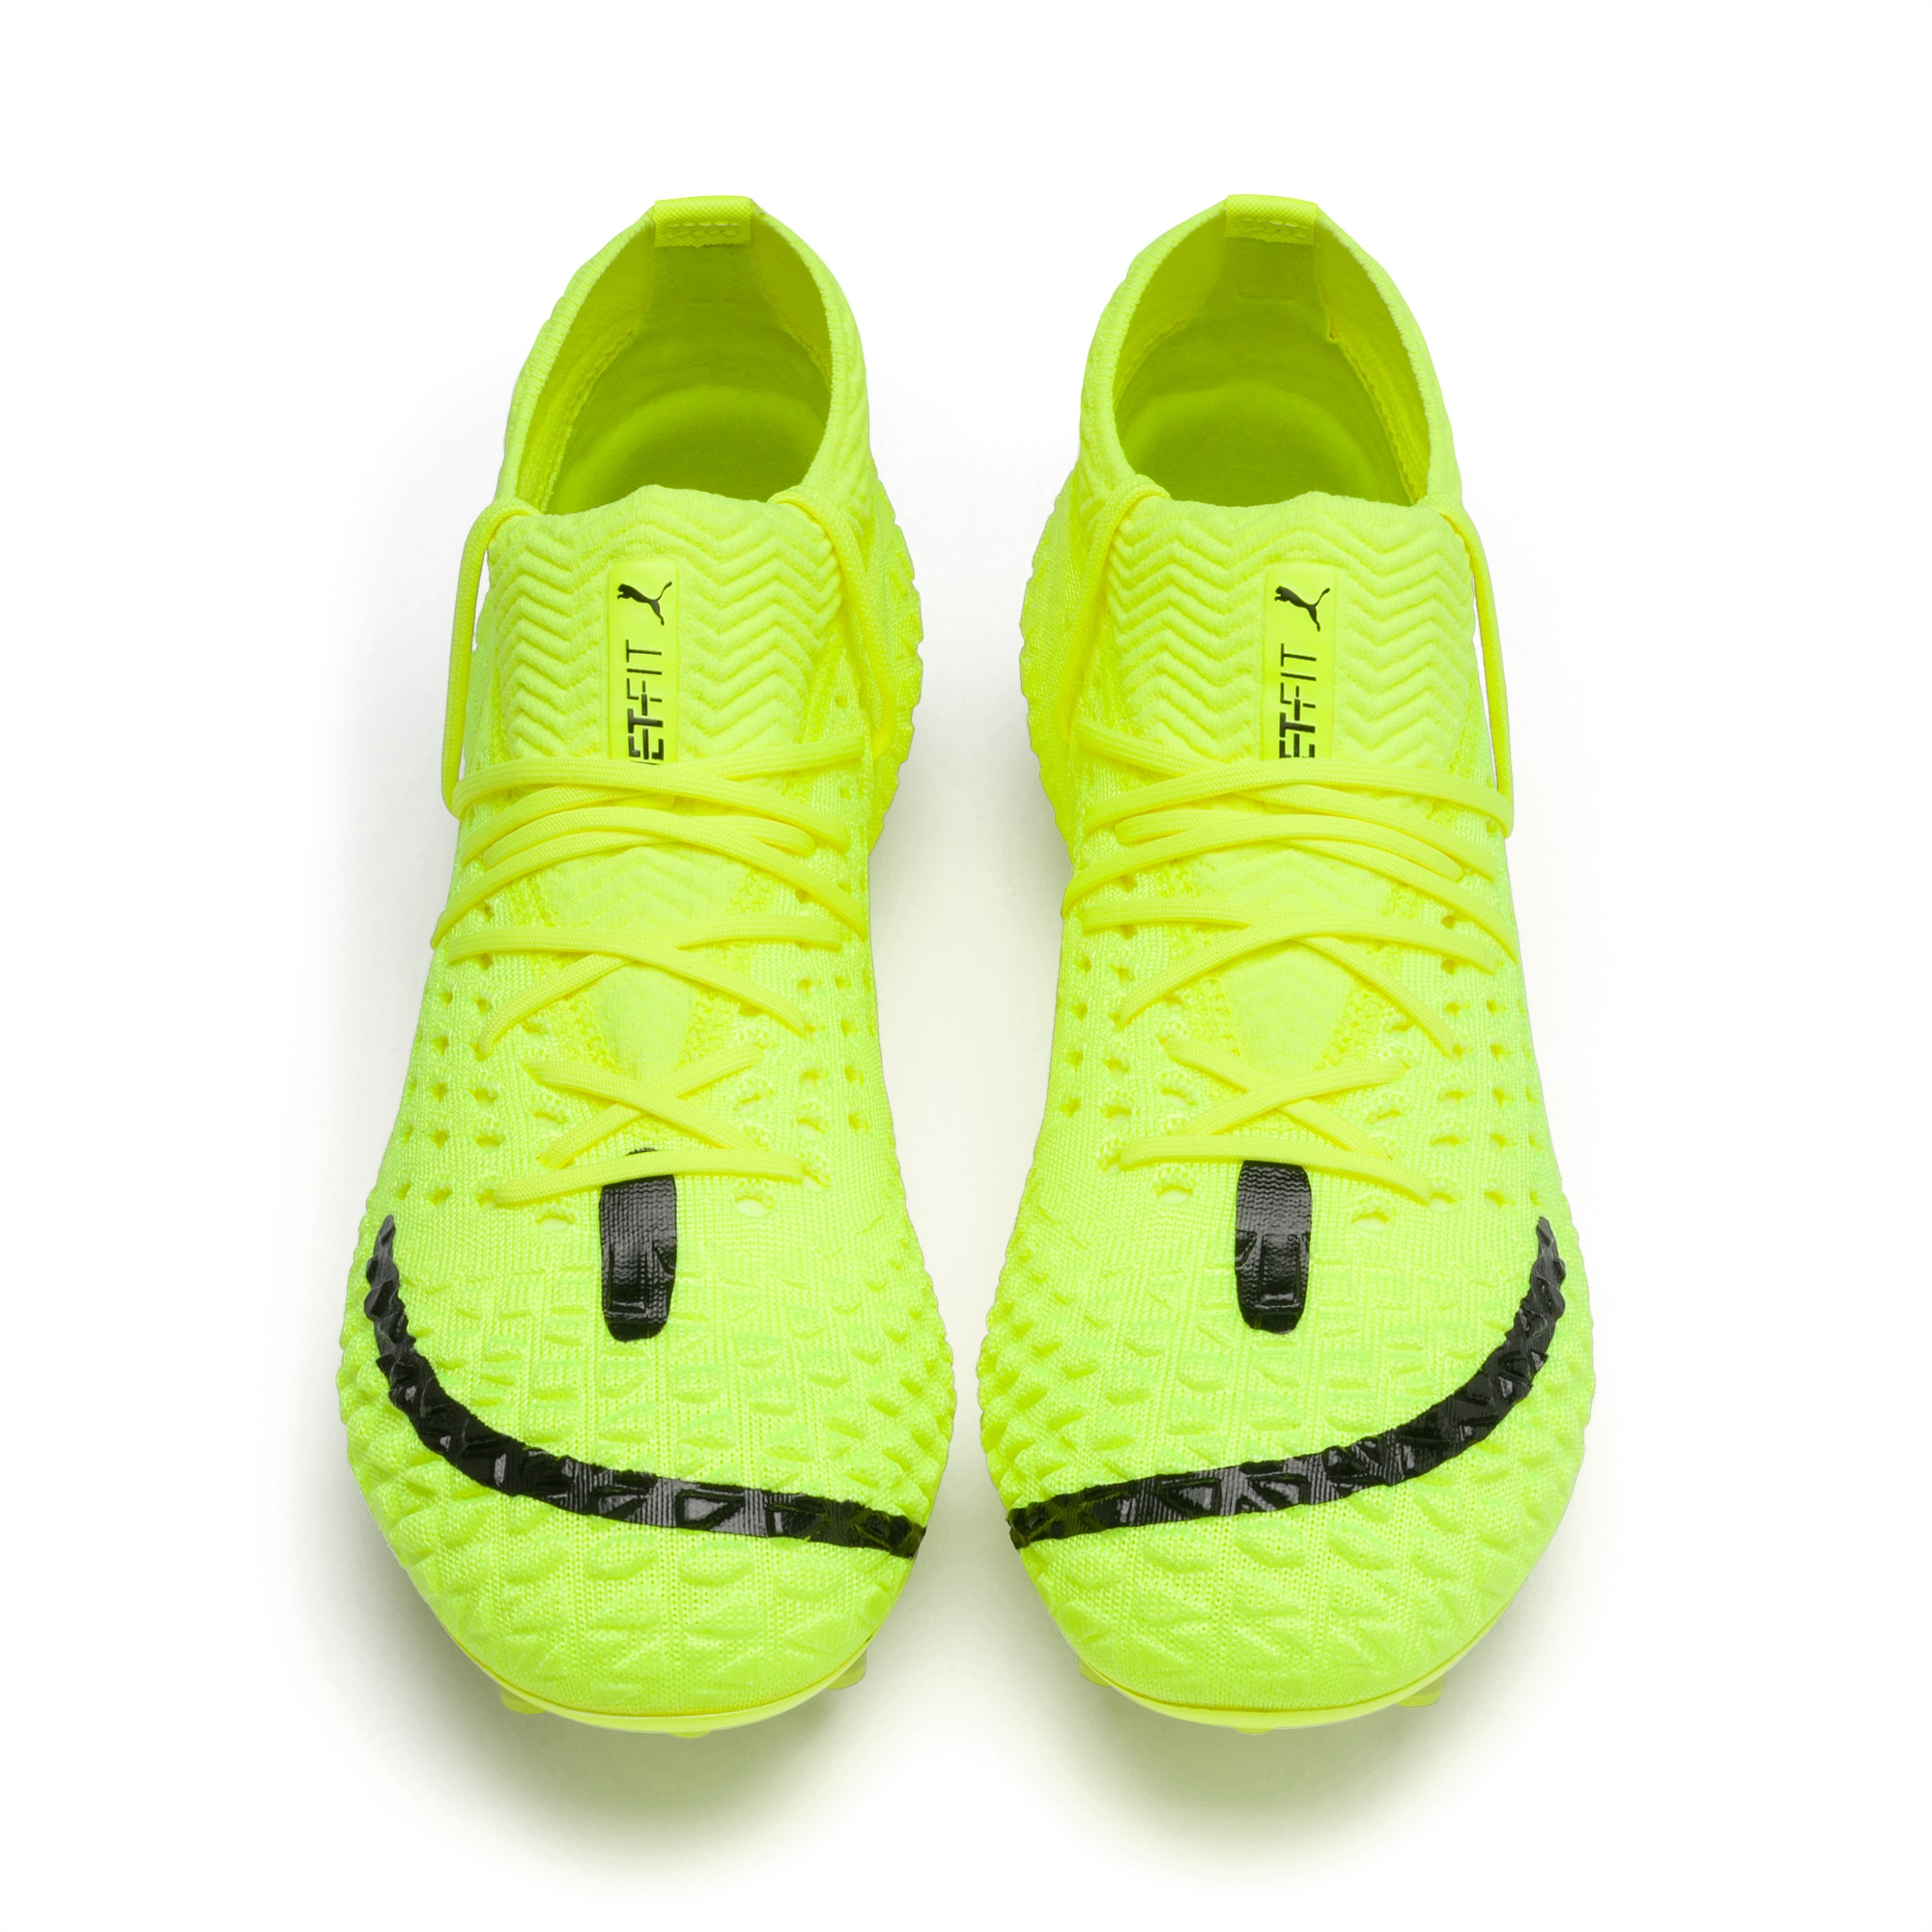 FUTURE 4.1 NETFIT Griezmann FG/AG Men's Football Boots | PUMA Shoes | PUMA  United Kingdom